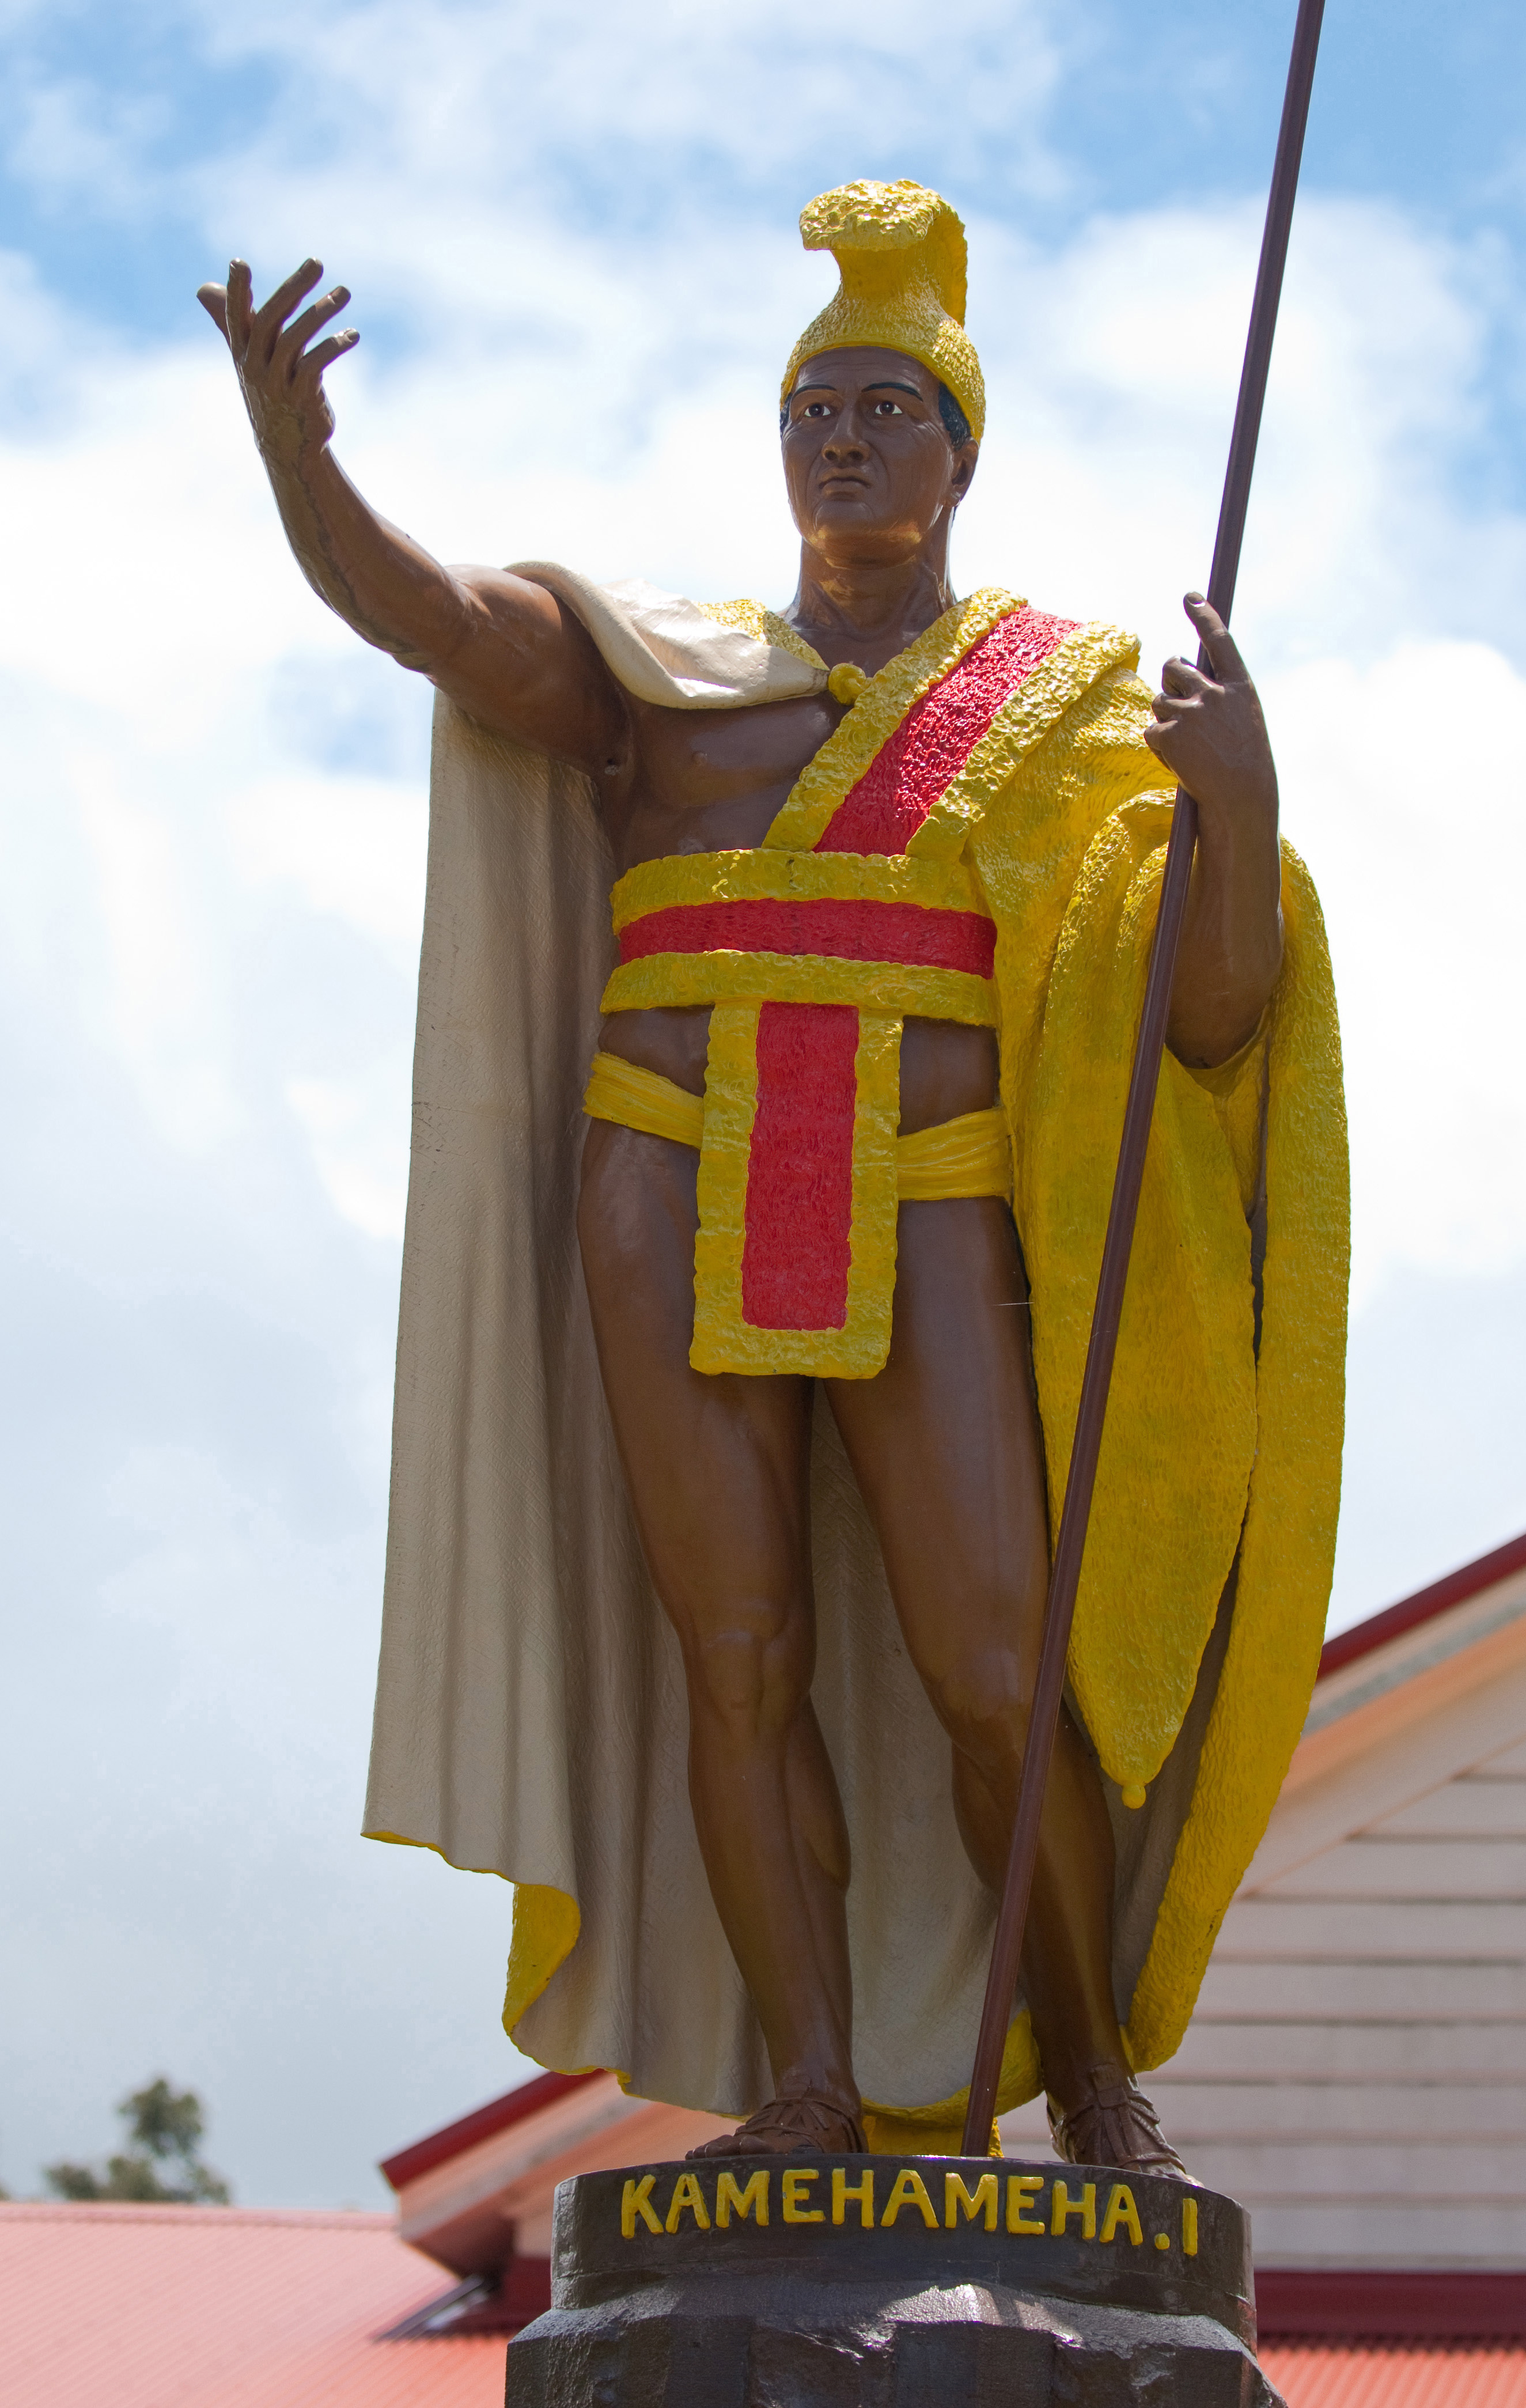 [Kamehameha] Kamehameha statue in Kohala. Photo by Ruben Carillo.